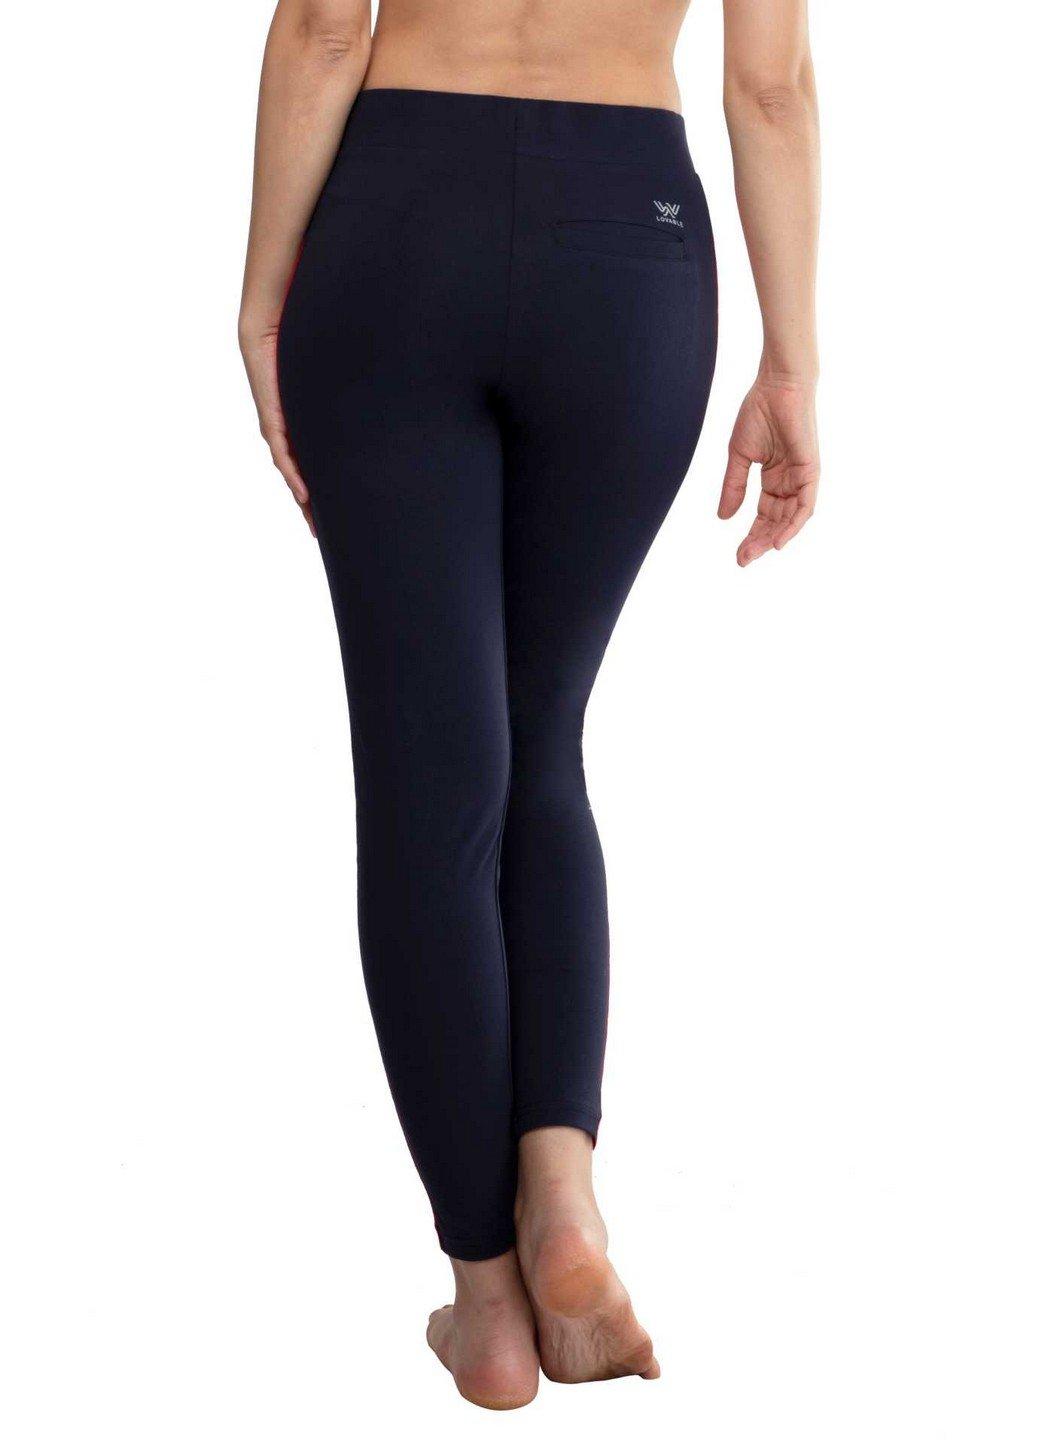 Lovable Black Cotton Gym Wear Tights Yoga Pants With Pocket - Stilento